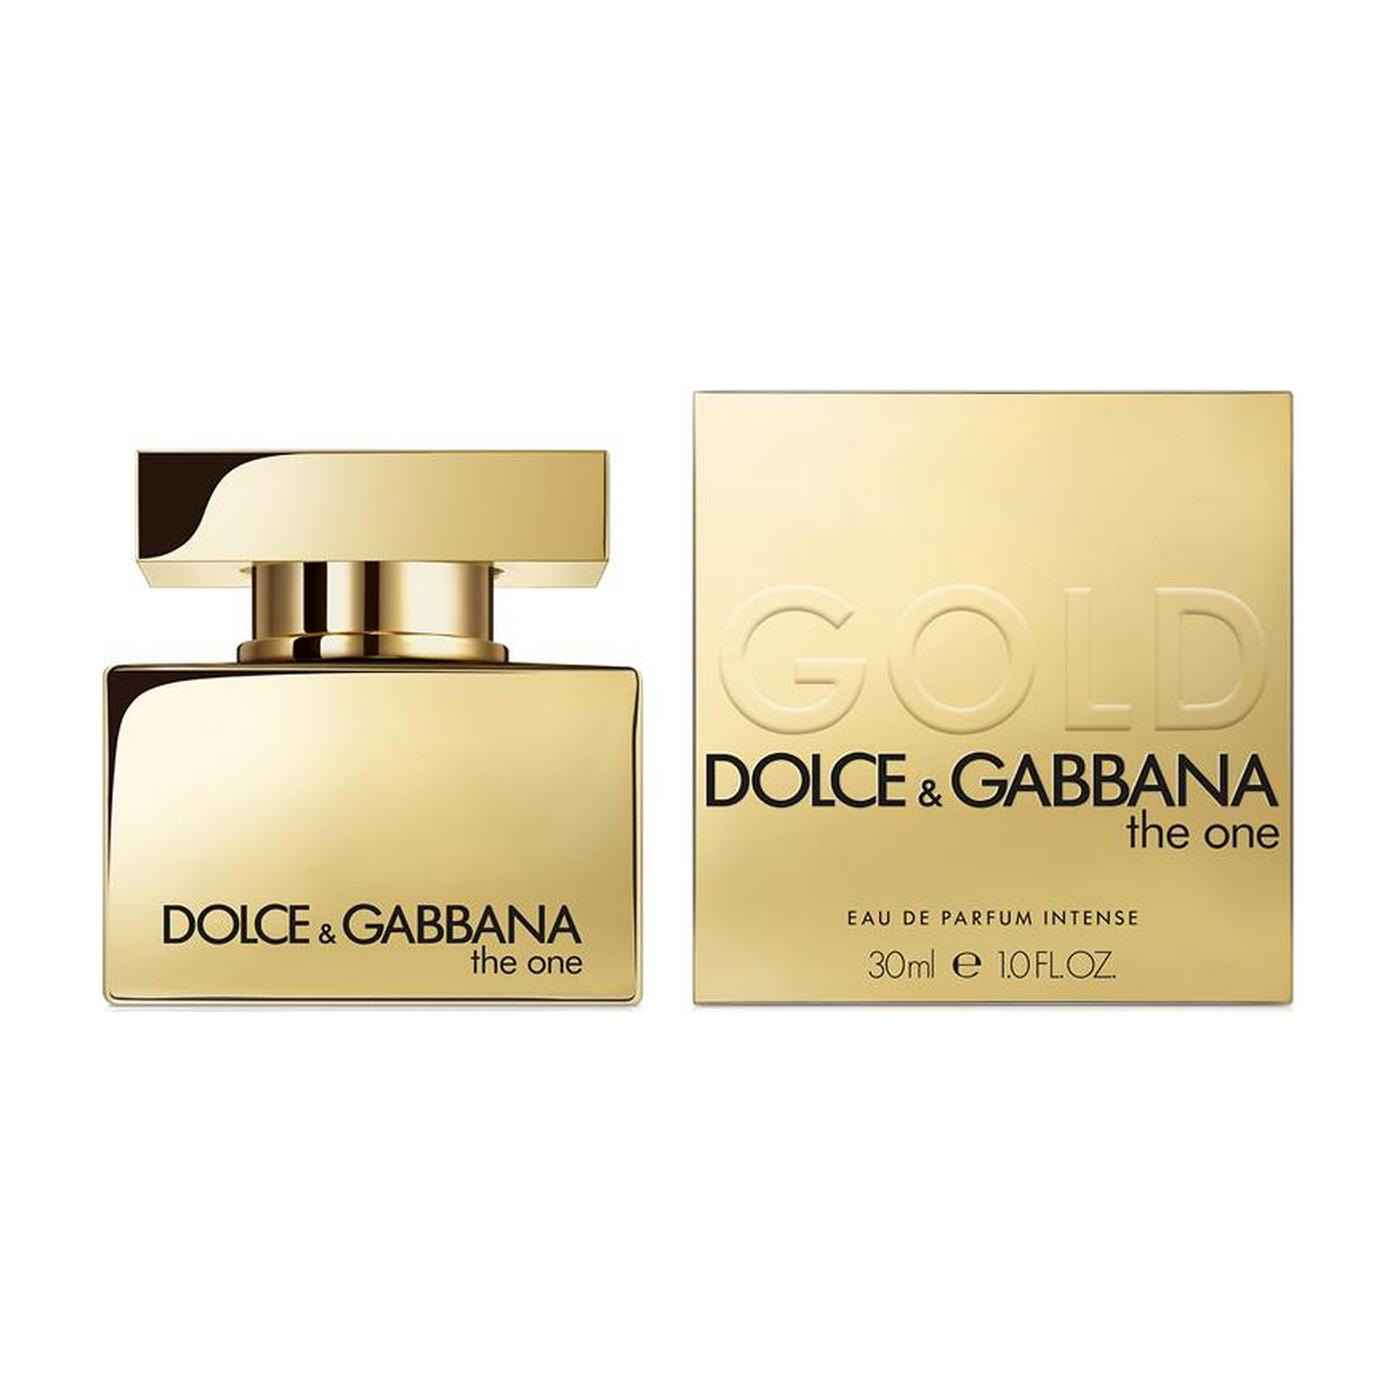 Дольче габбана intense. Dolce Gabbana the one Gold intense. Dolce Gabbana the one 75 ml. Дольче Габбана оне Голд Интенс. Dolce Gabbana the one Gold intense женские.